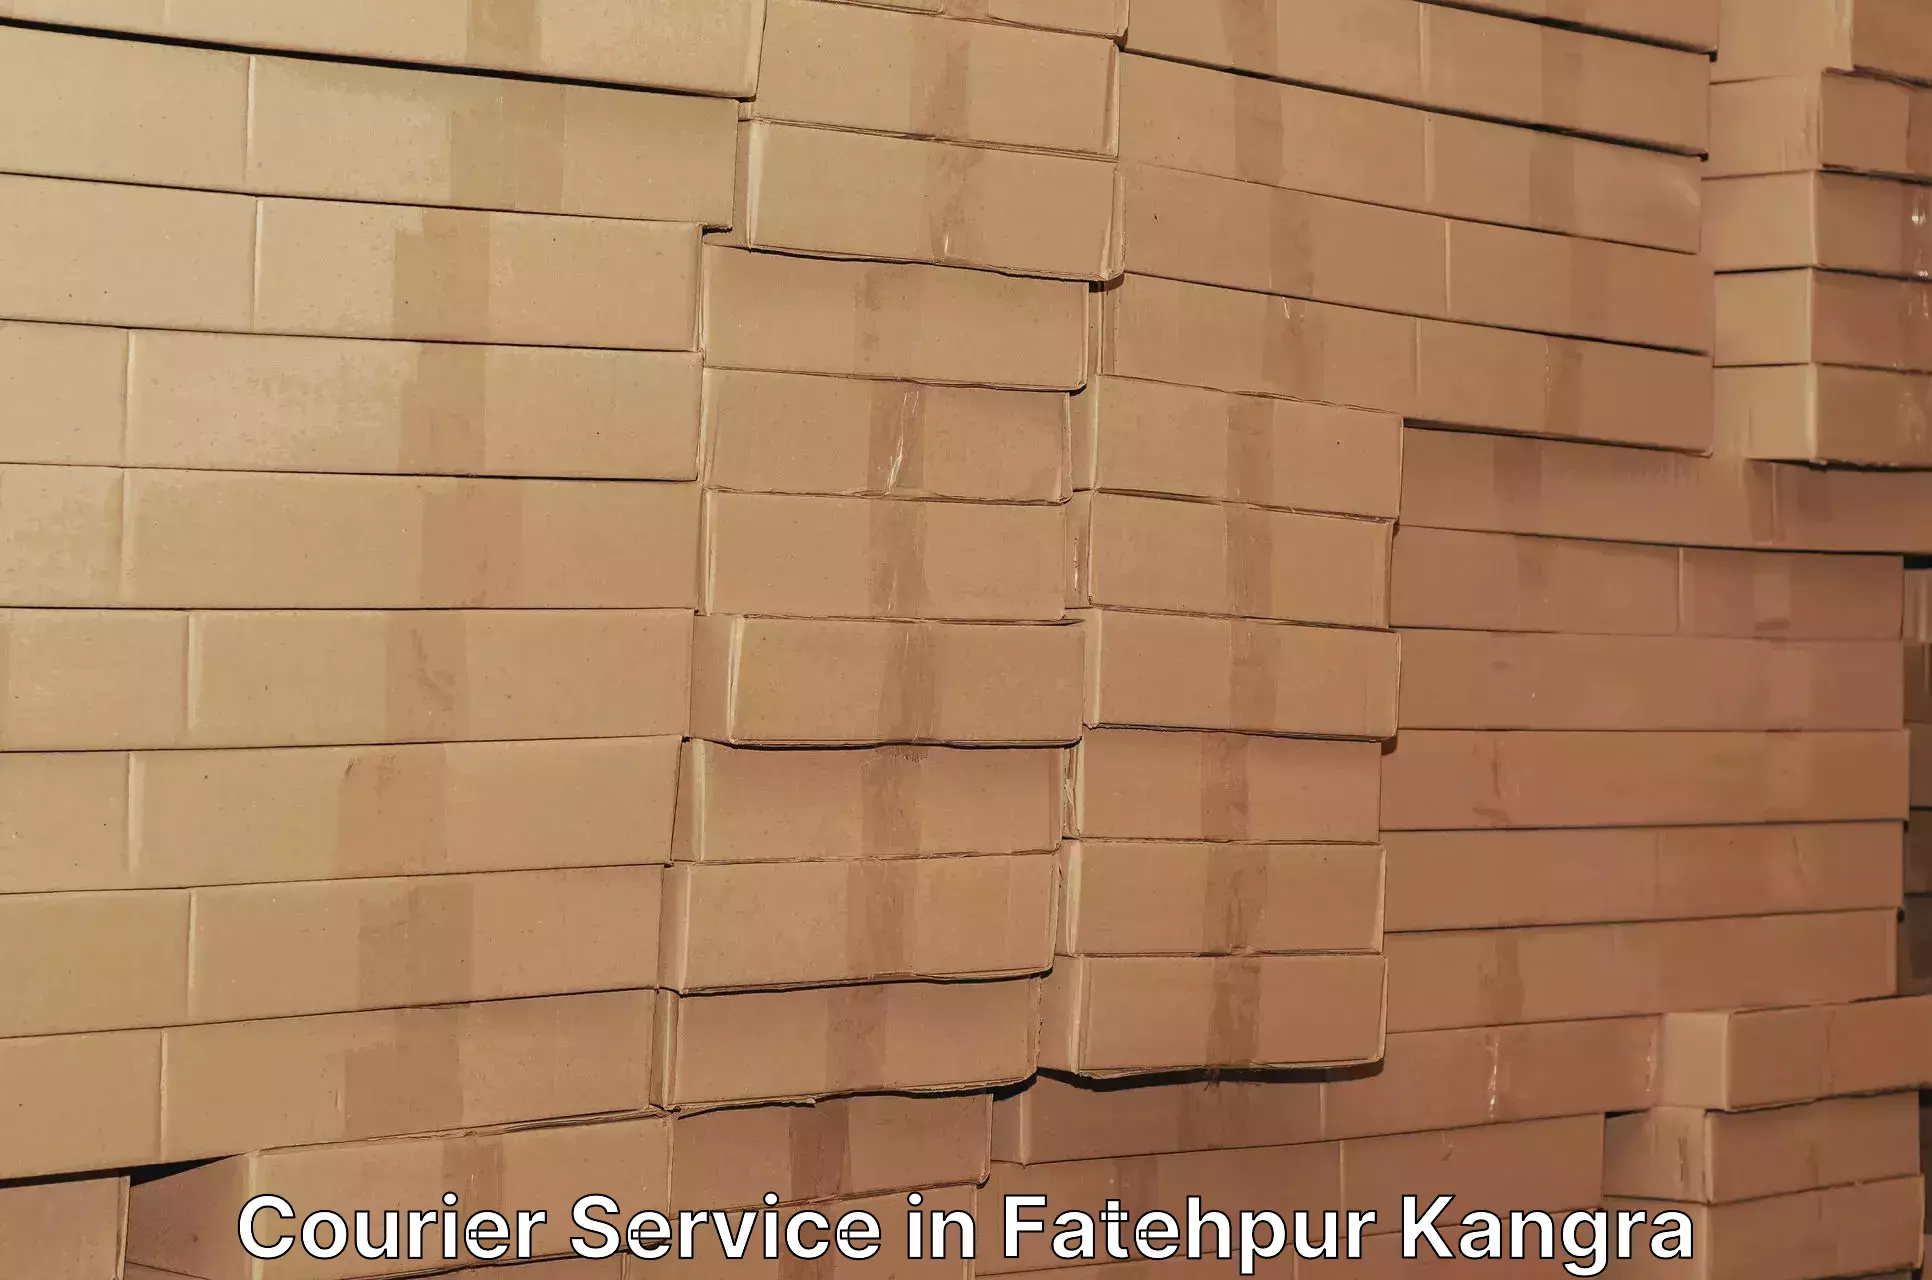 Efficient order fulfillment in Fatehpur Kangra